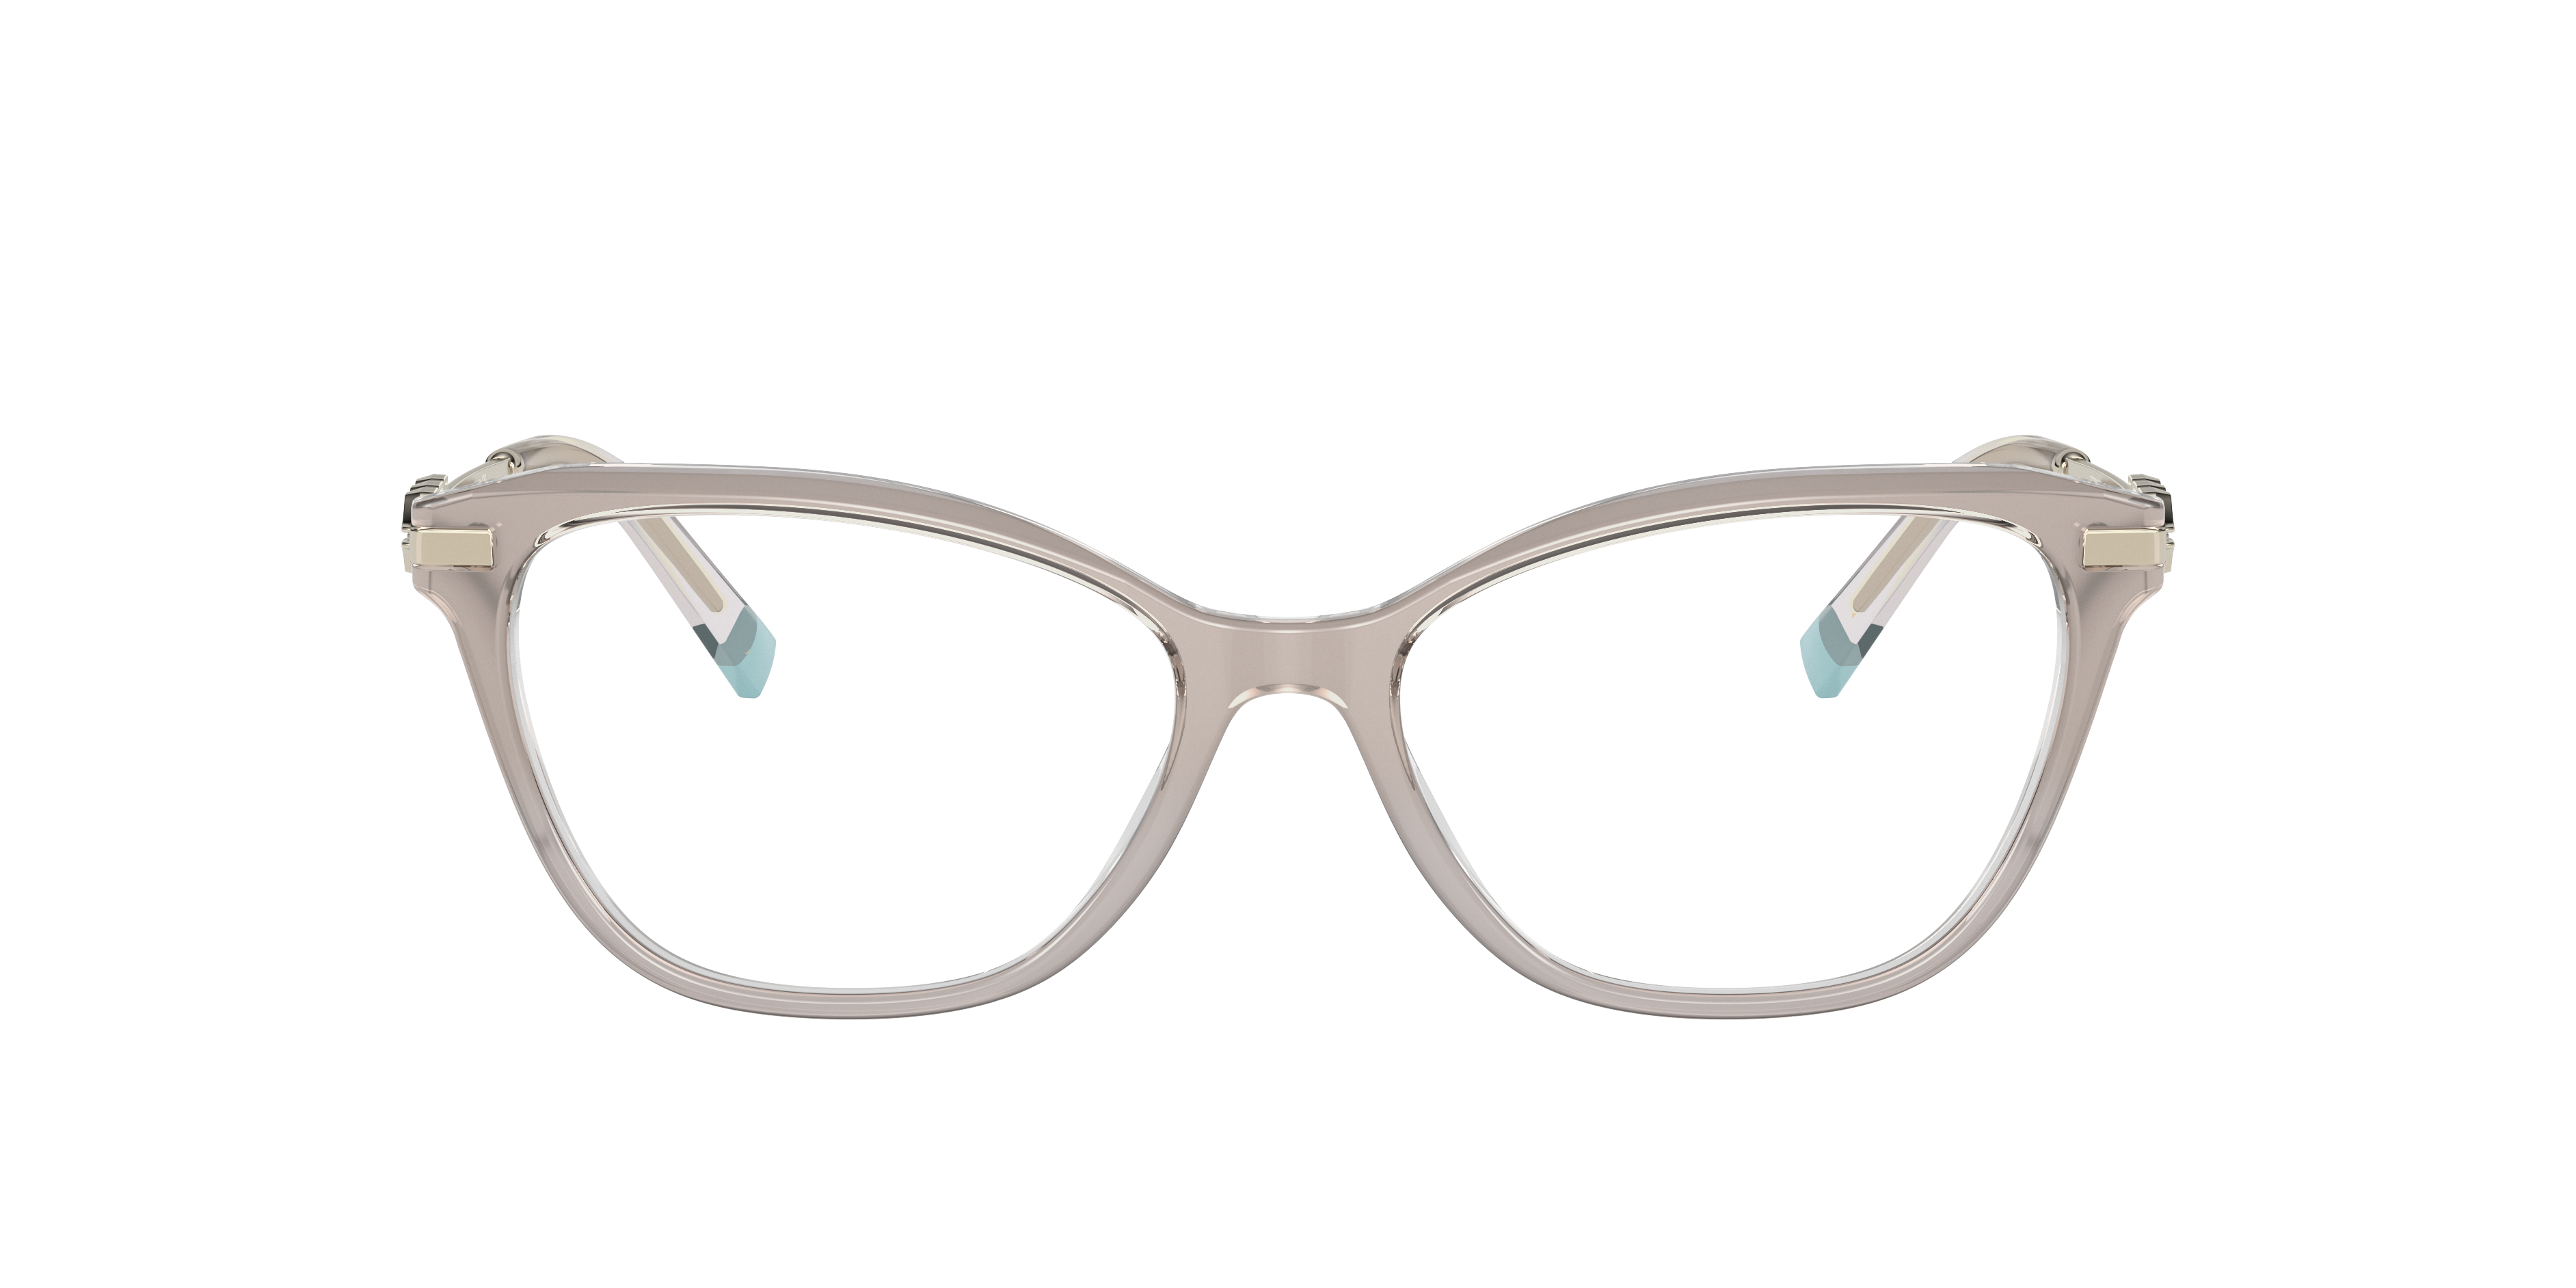 LensCrafters®: Prescription Eyewear & Contact Lenses - Eyeglasses